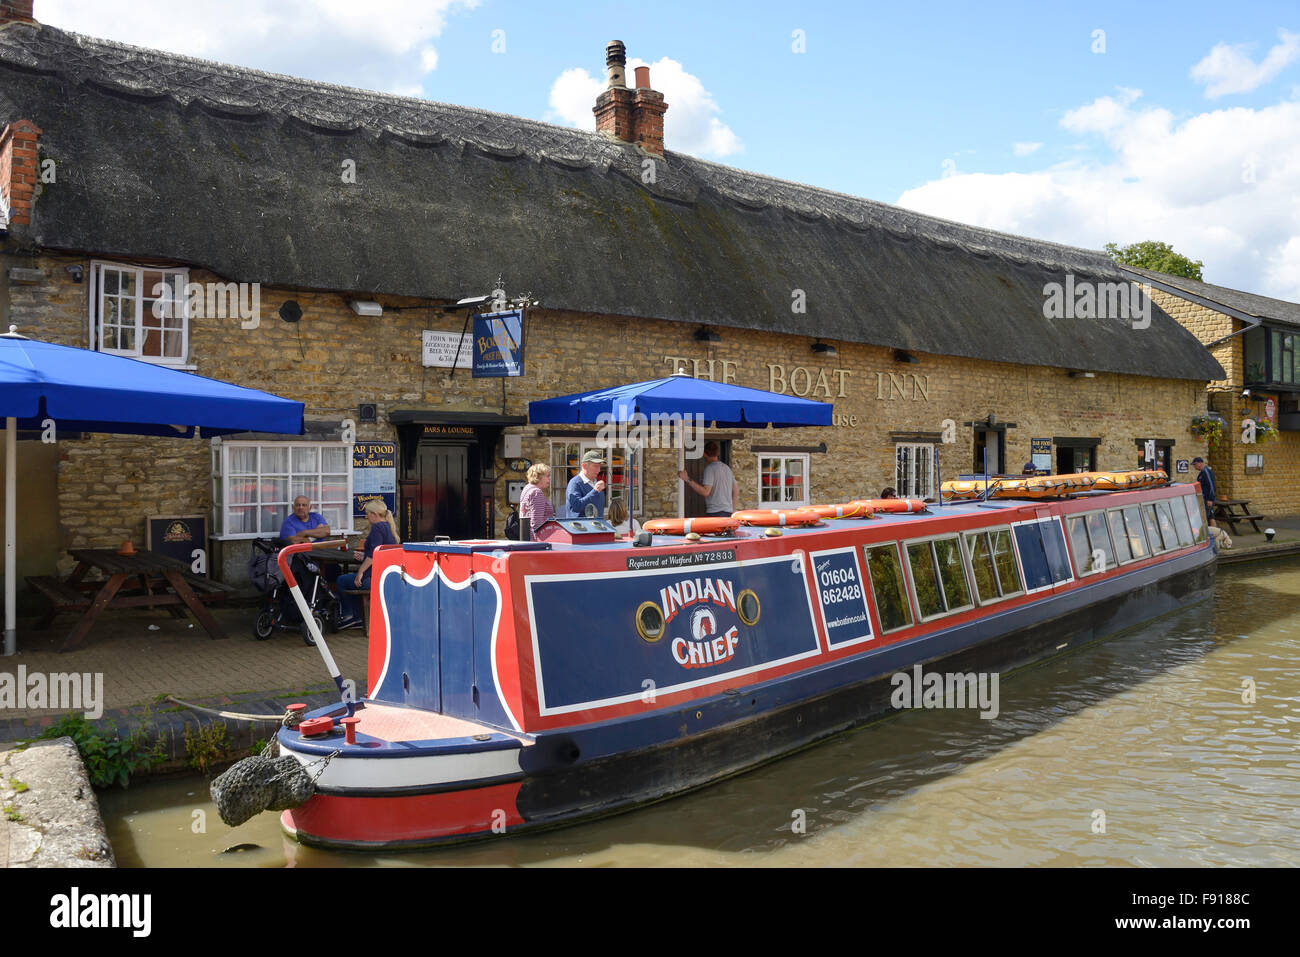 The Boat Inn on Grand Union Canal, Stoke Bruerne, Northamptonshire, England, United Kingdom Stock Photo